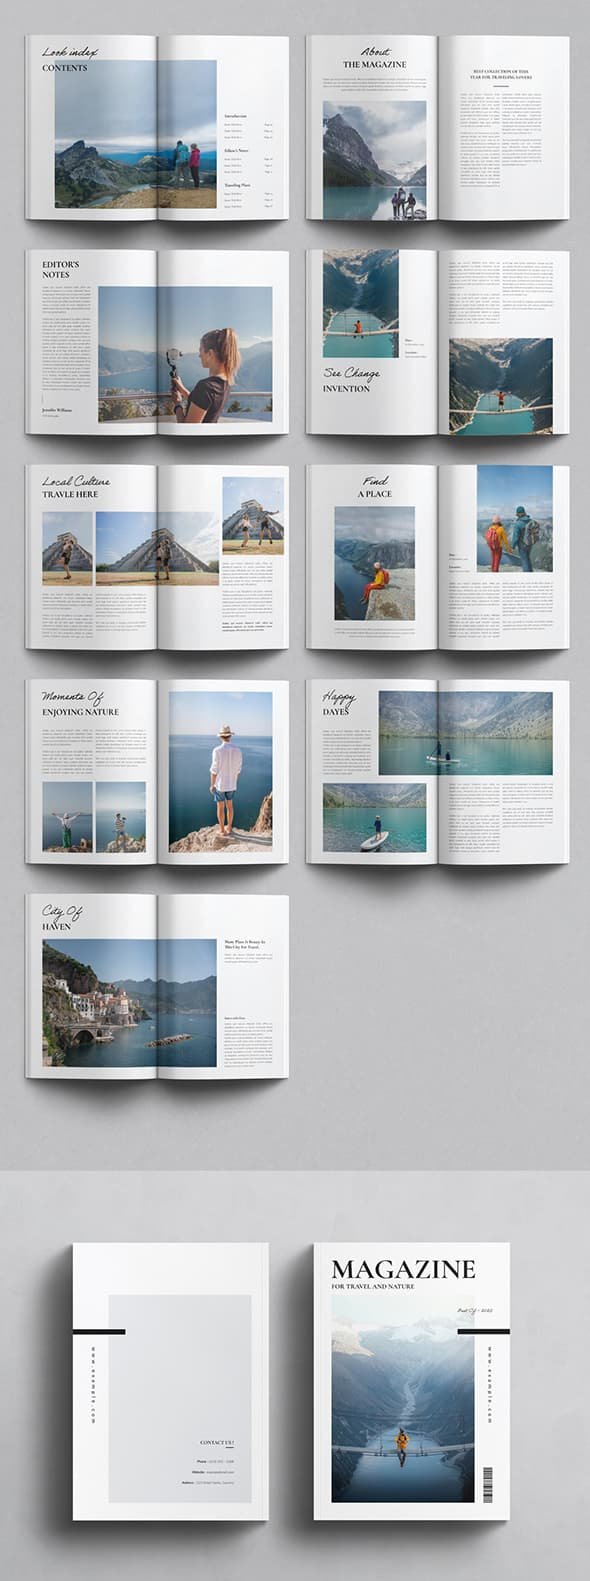 AdobeStock - Travel Magazine Layout - 605963127